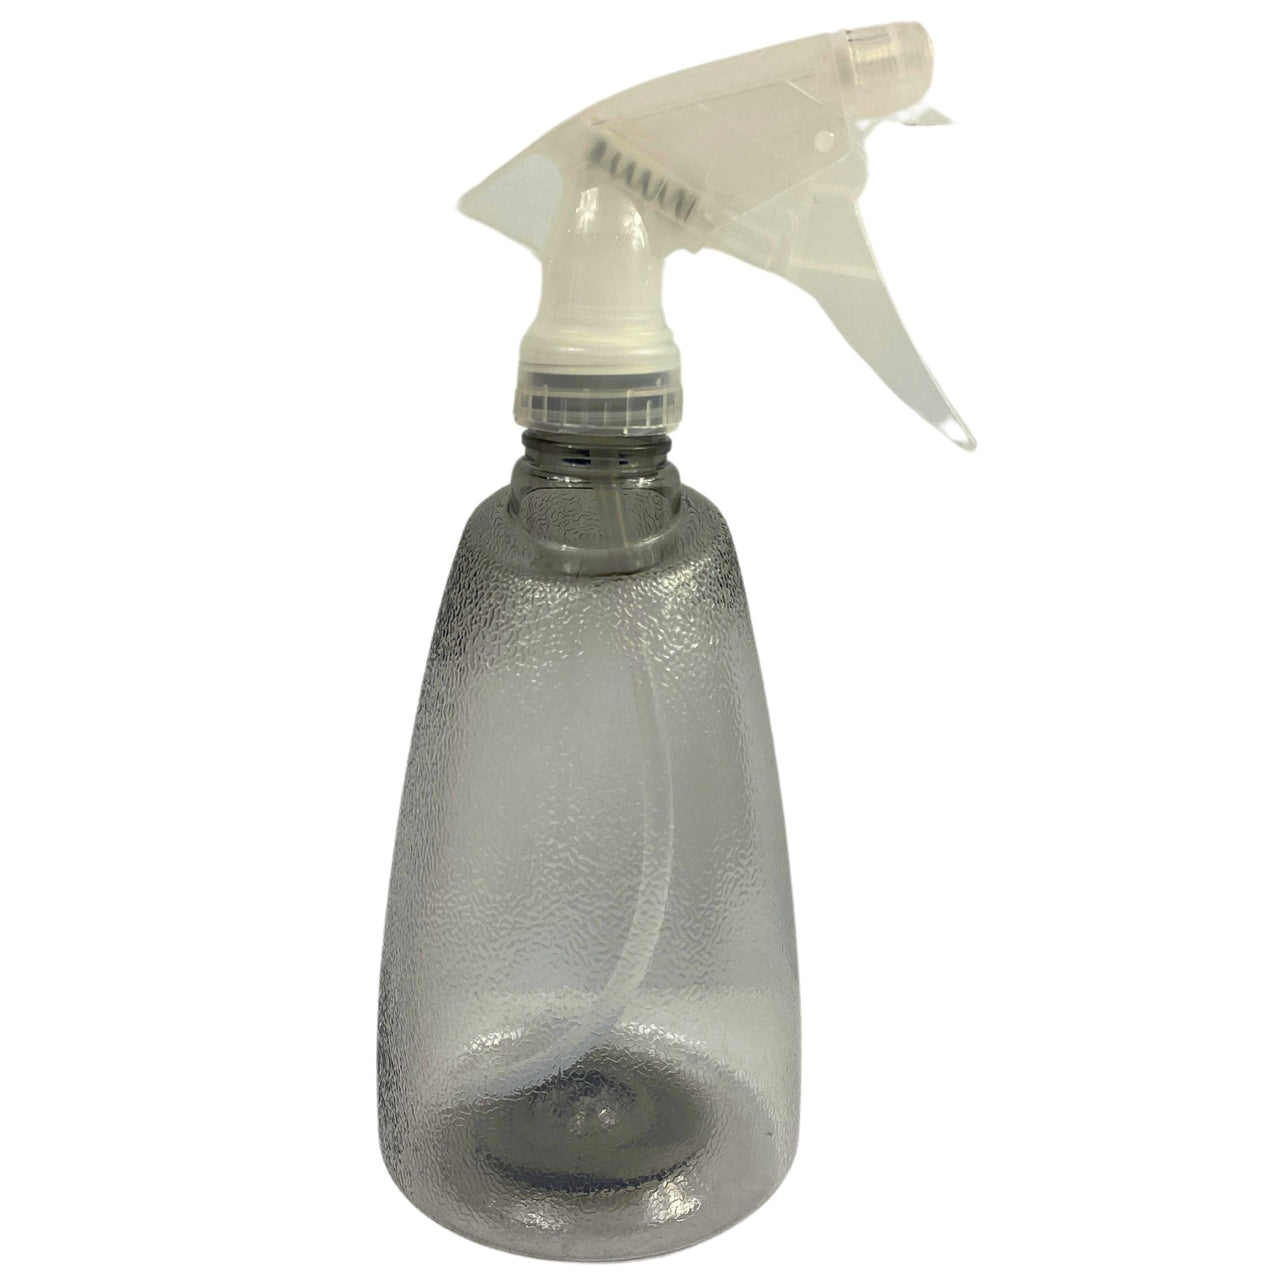 Our Goods Spray Bottle